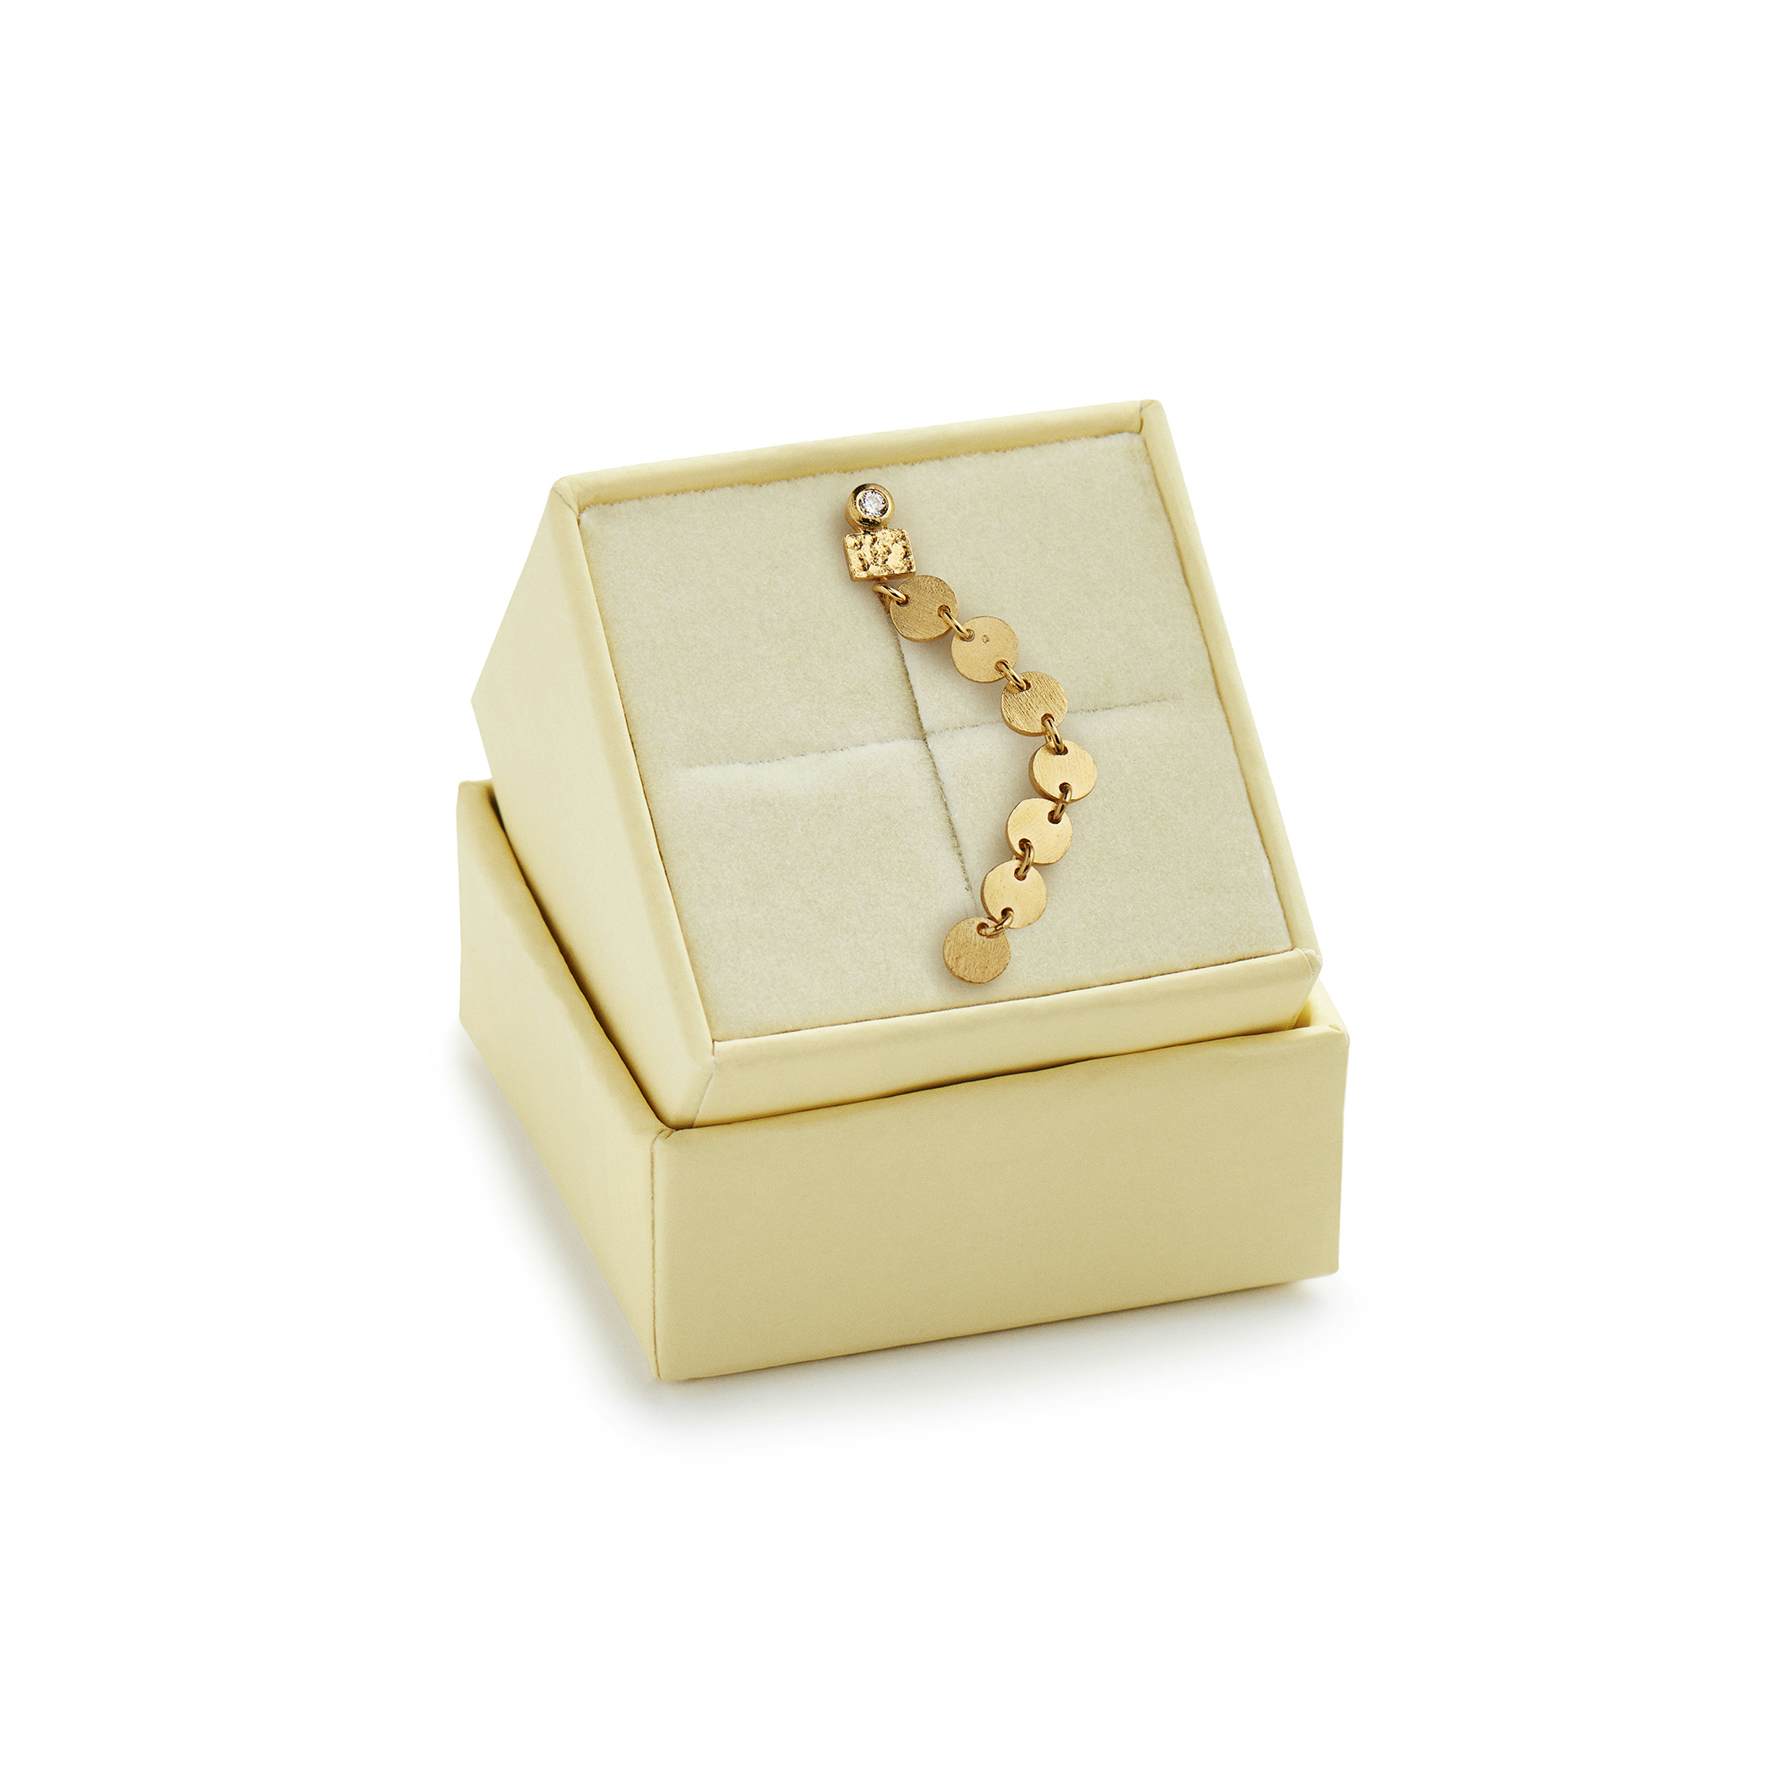 Love Box - A Little Glamour - La Mer fra STINE A Jewelry i Forgyldt-Sølv Sterling 925